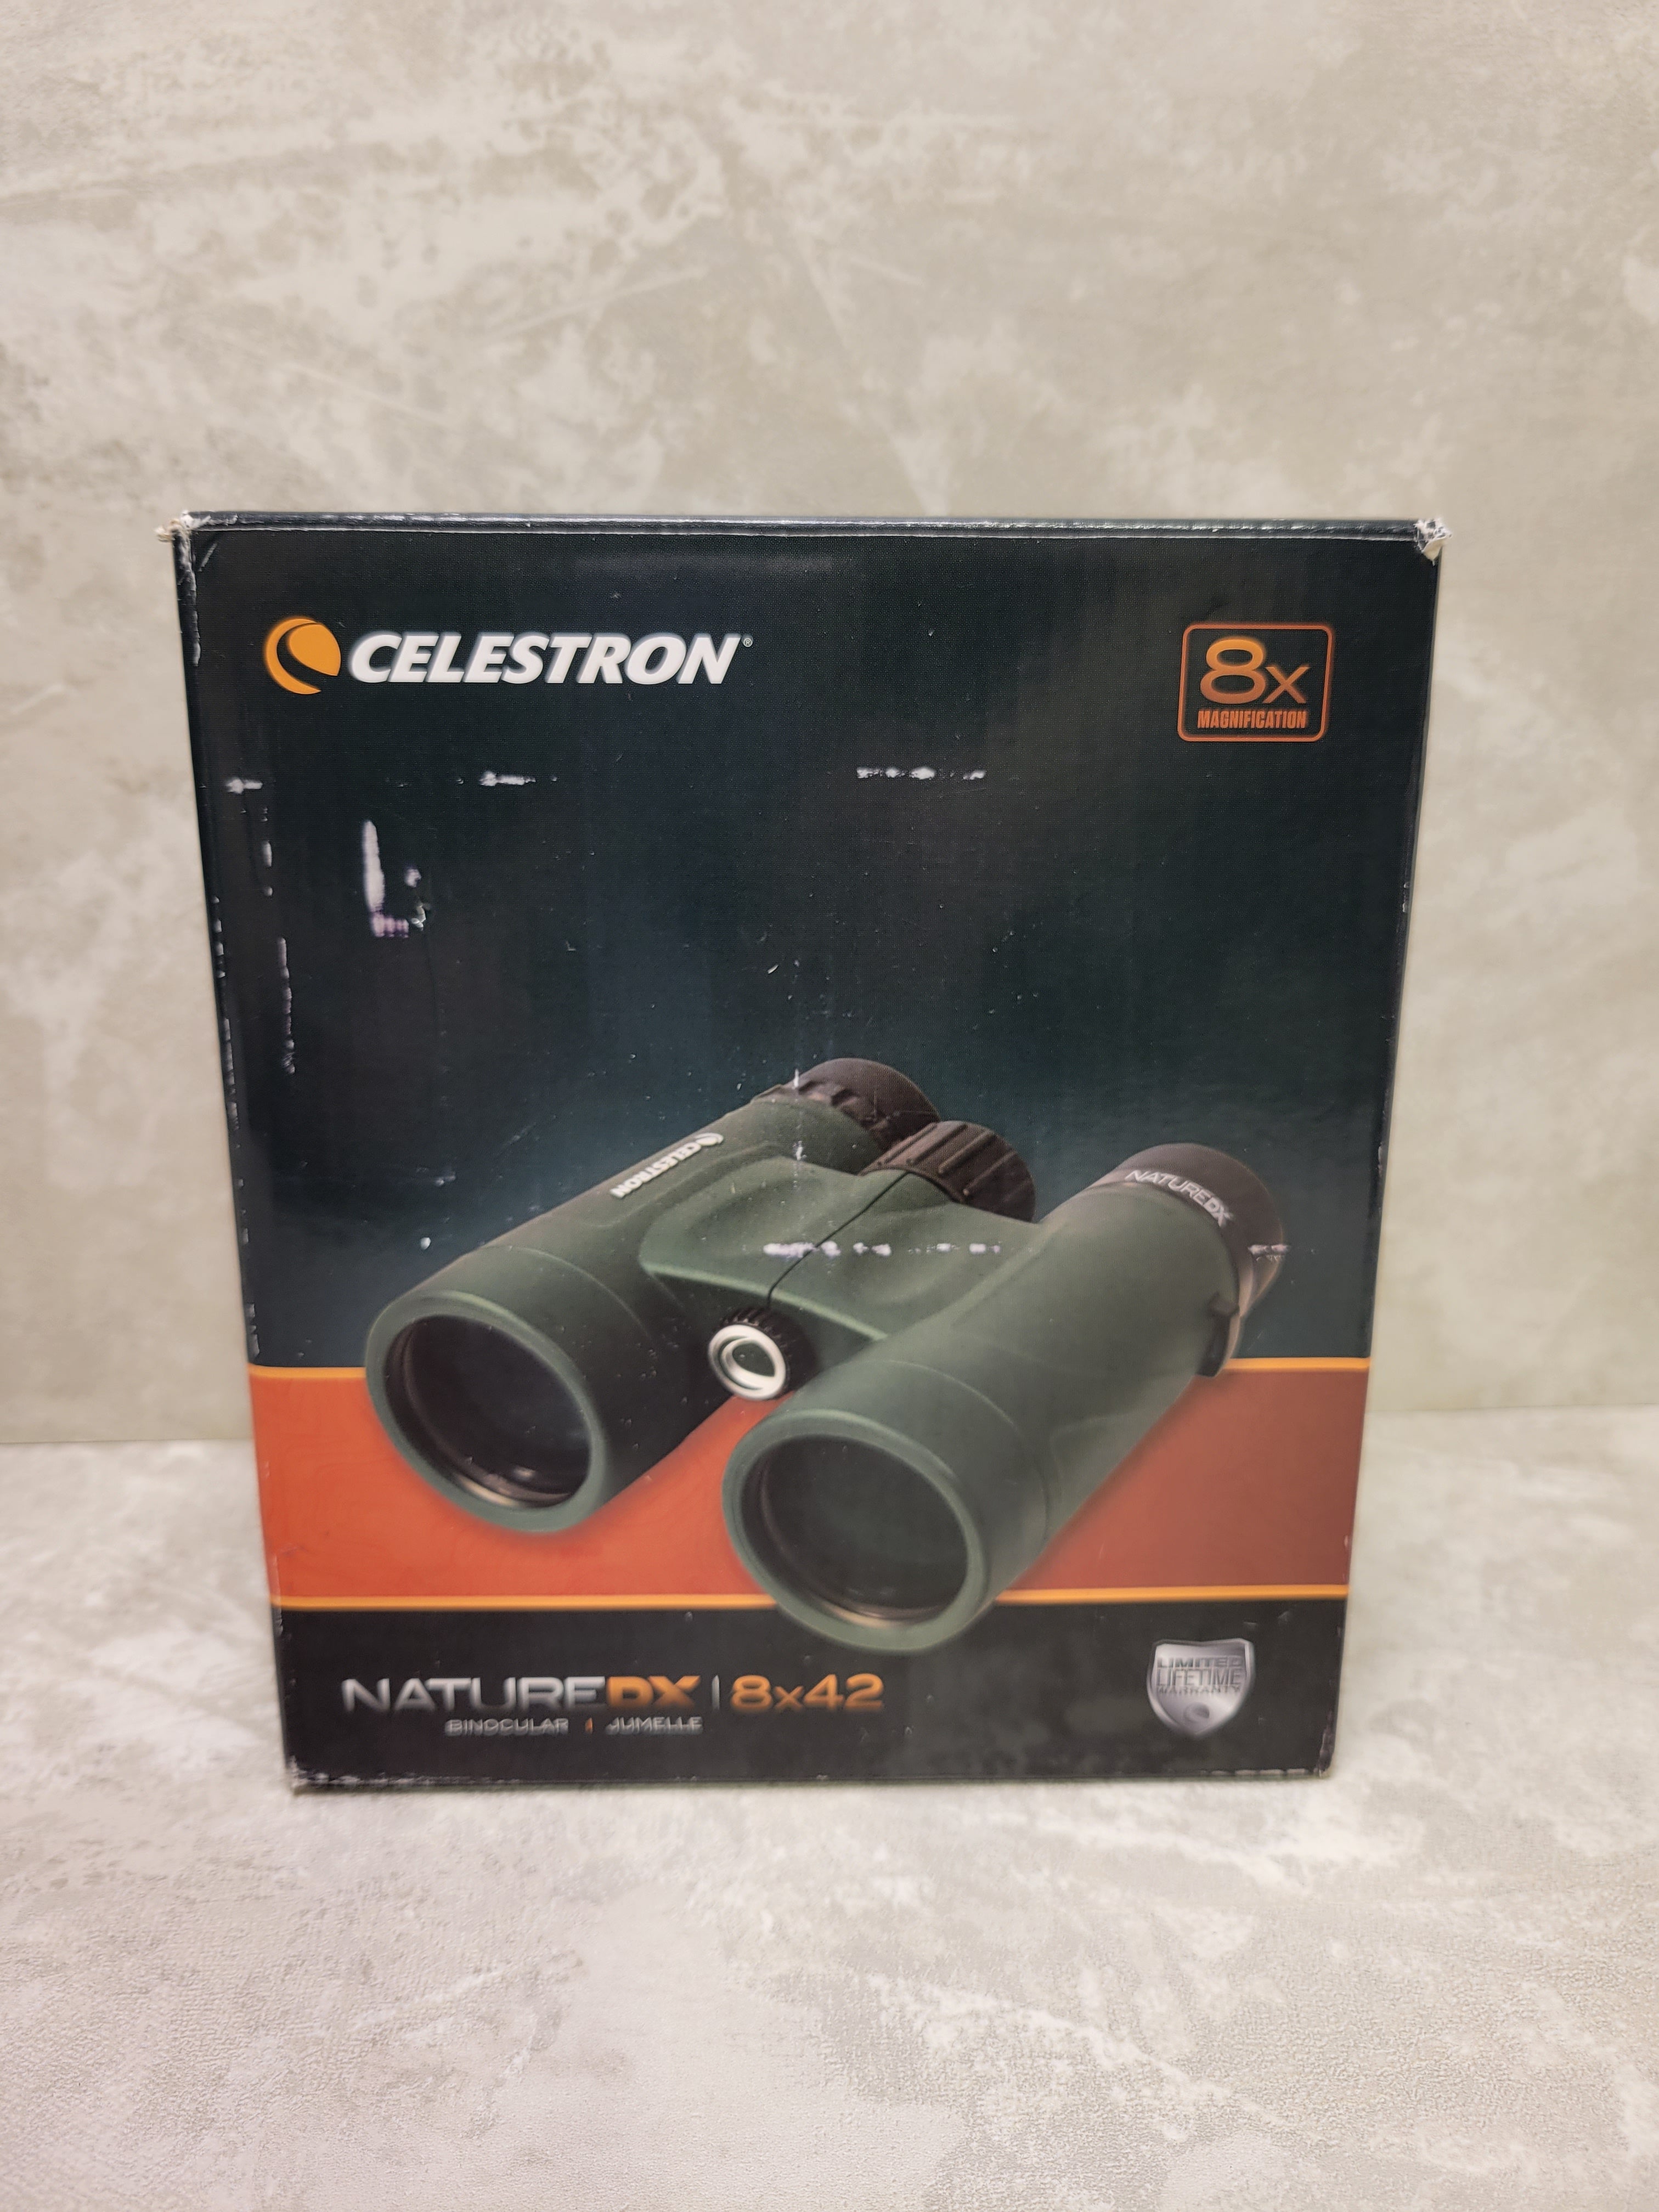 Celestron – Nature DX 8x42 Binoculars (7615031804142)